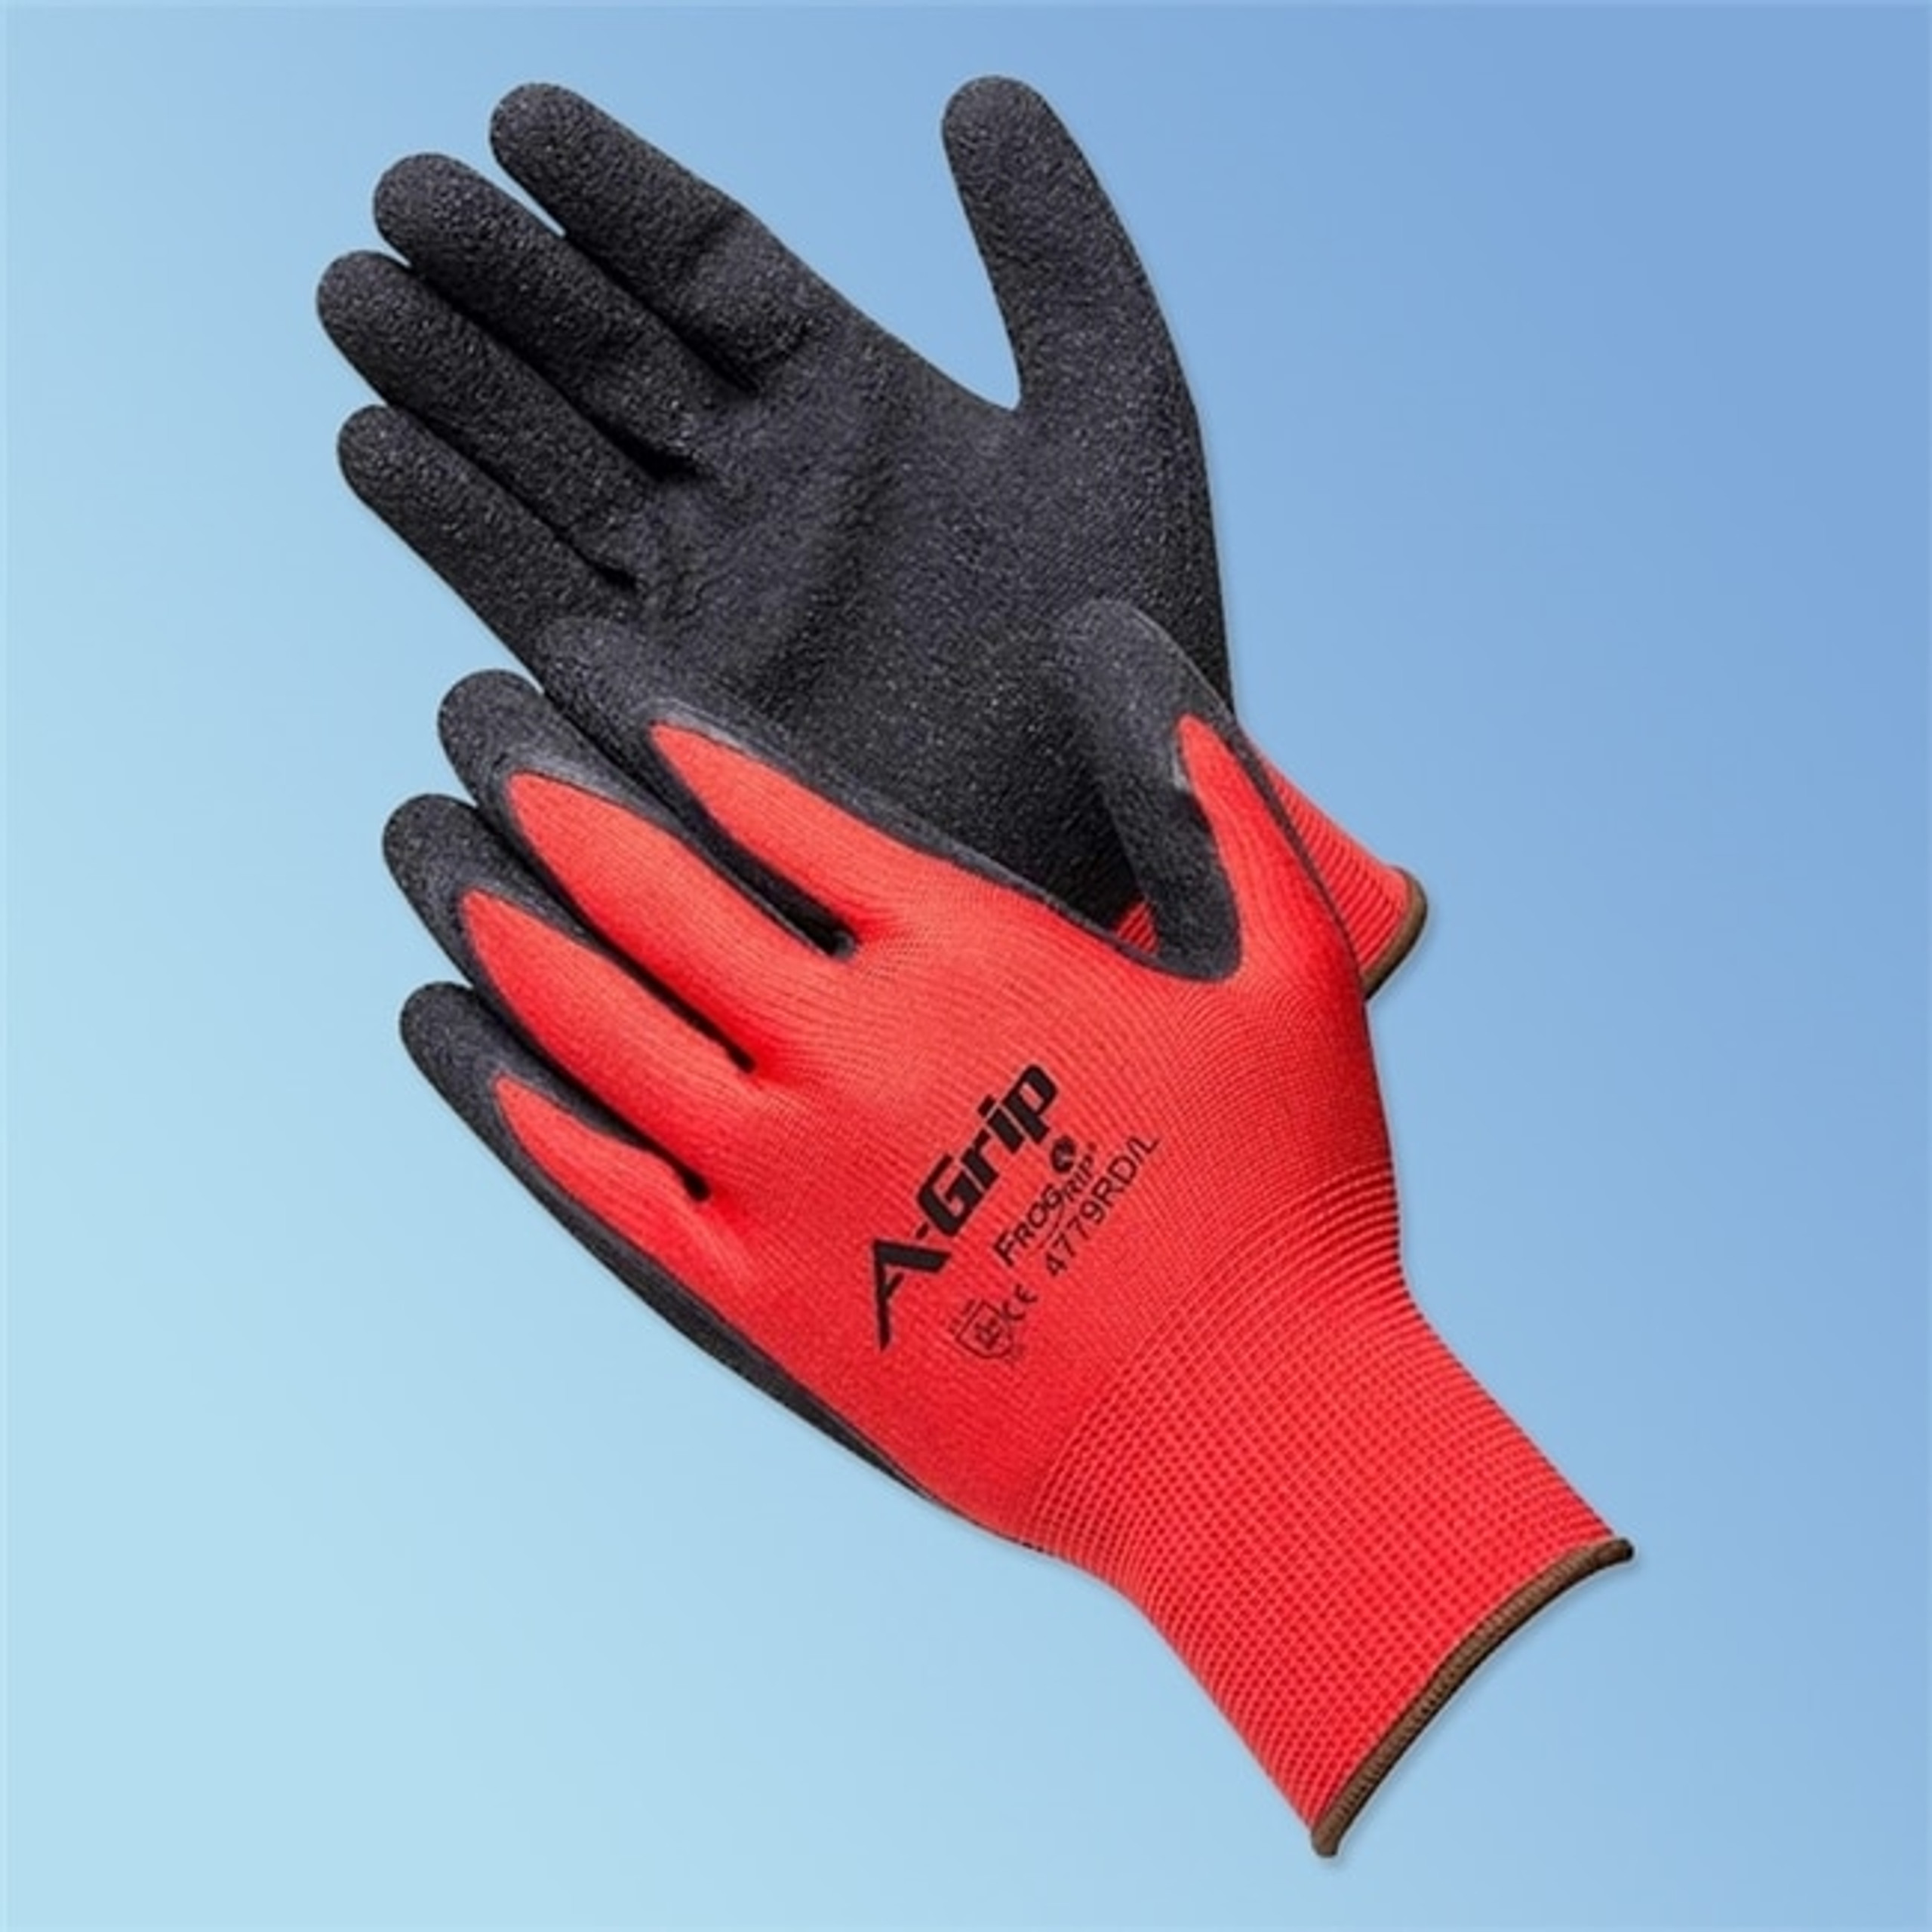 A-Grip Textured Latex Coated Glove